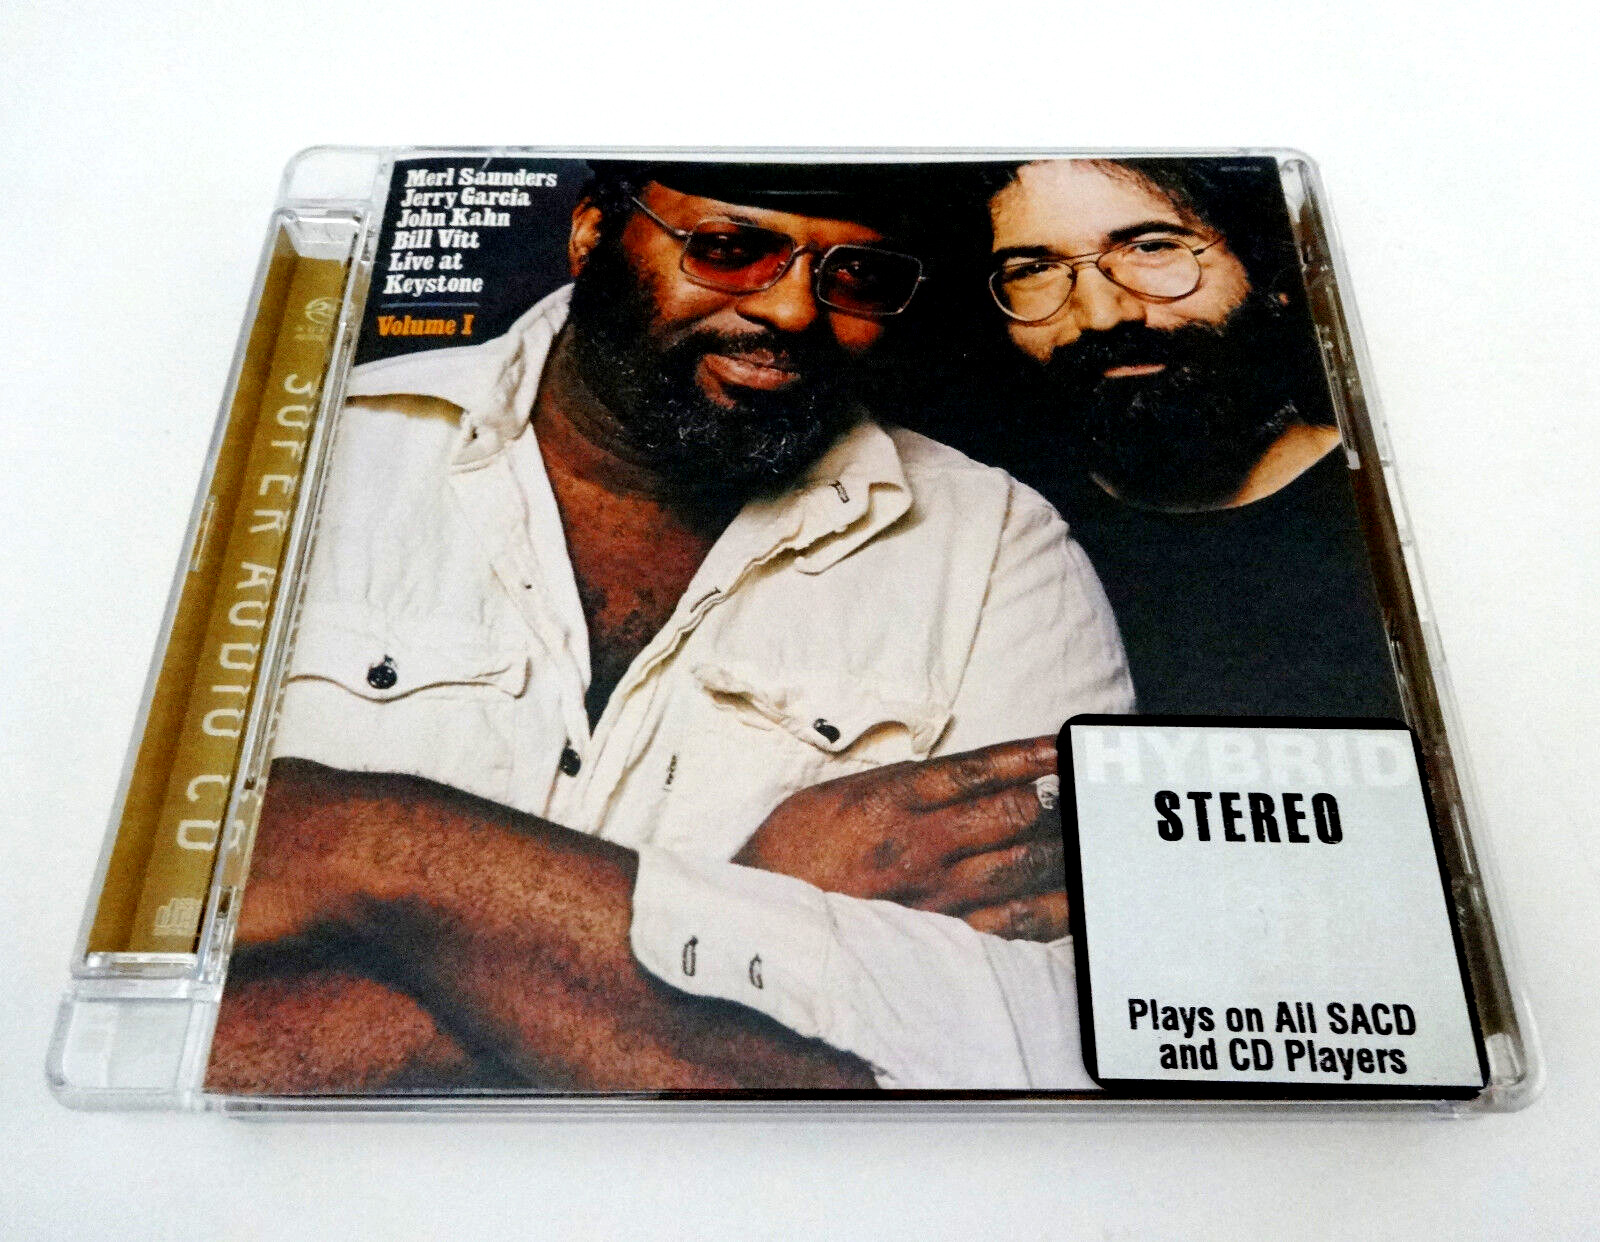 Jerry Garcia Merl Saunders Live at Keystone 1 SACD Super Audio CD Grateful Dead